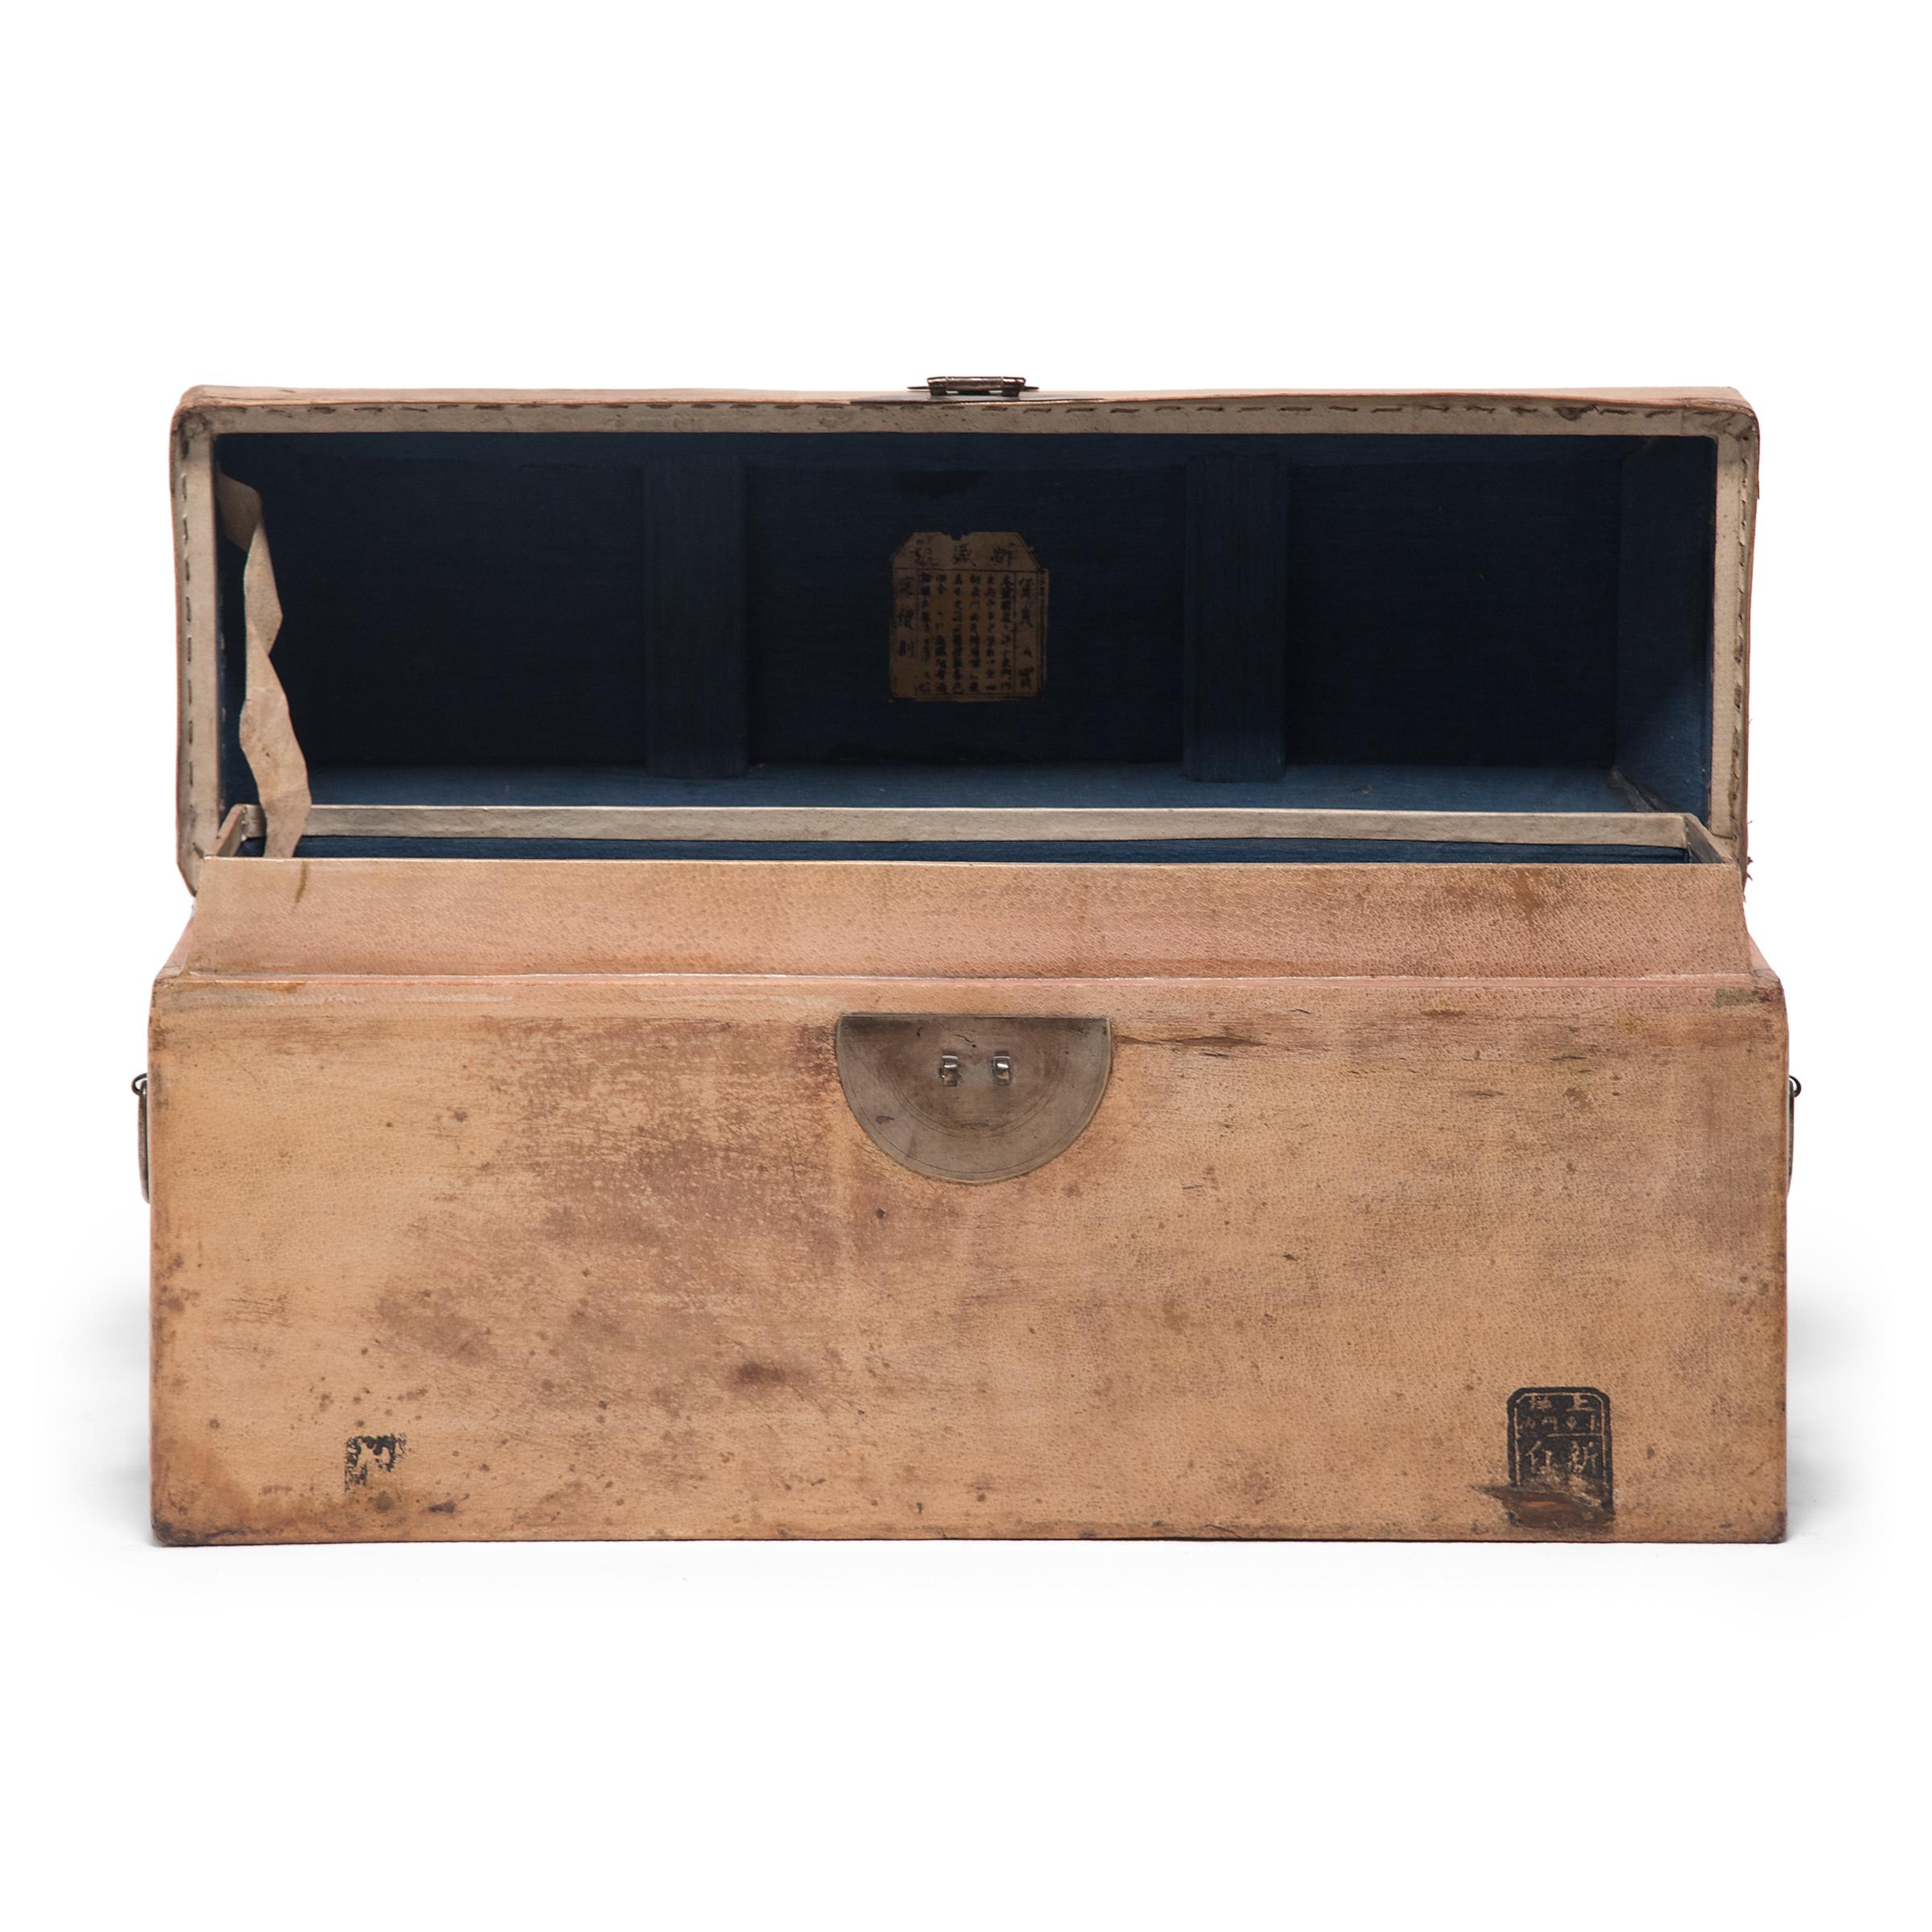 19th Century Chinese Hide Document Box, c. 1850